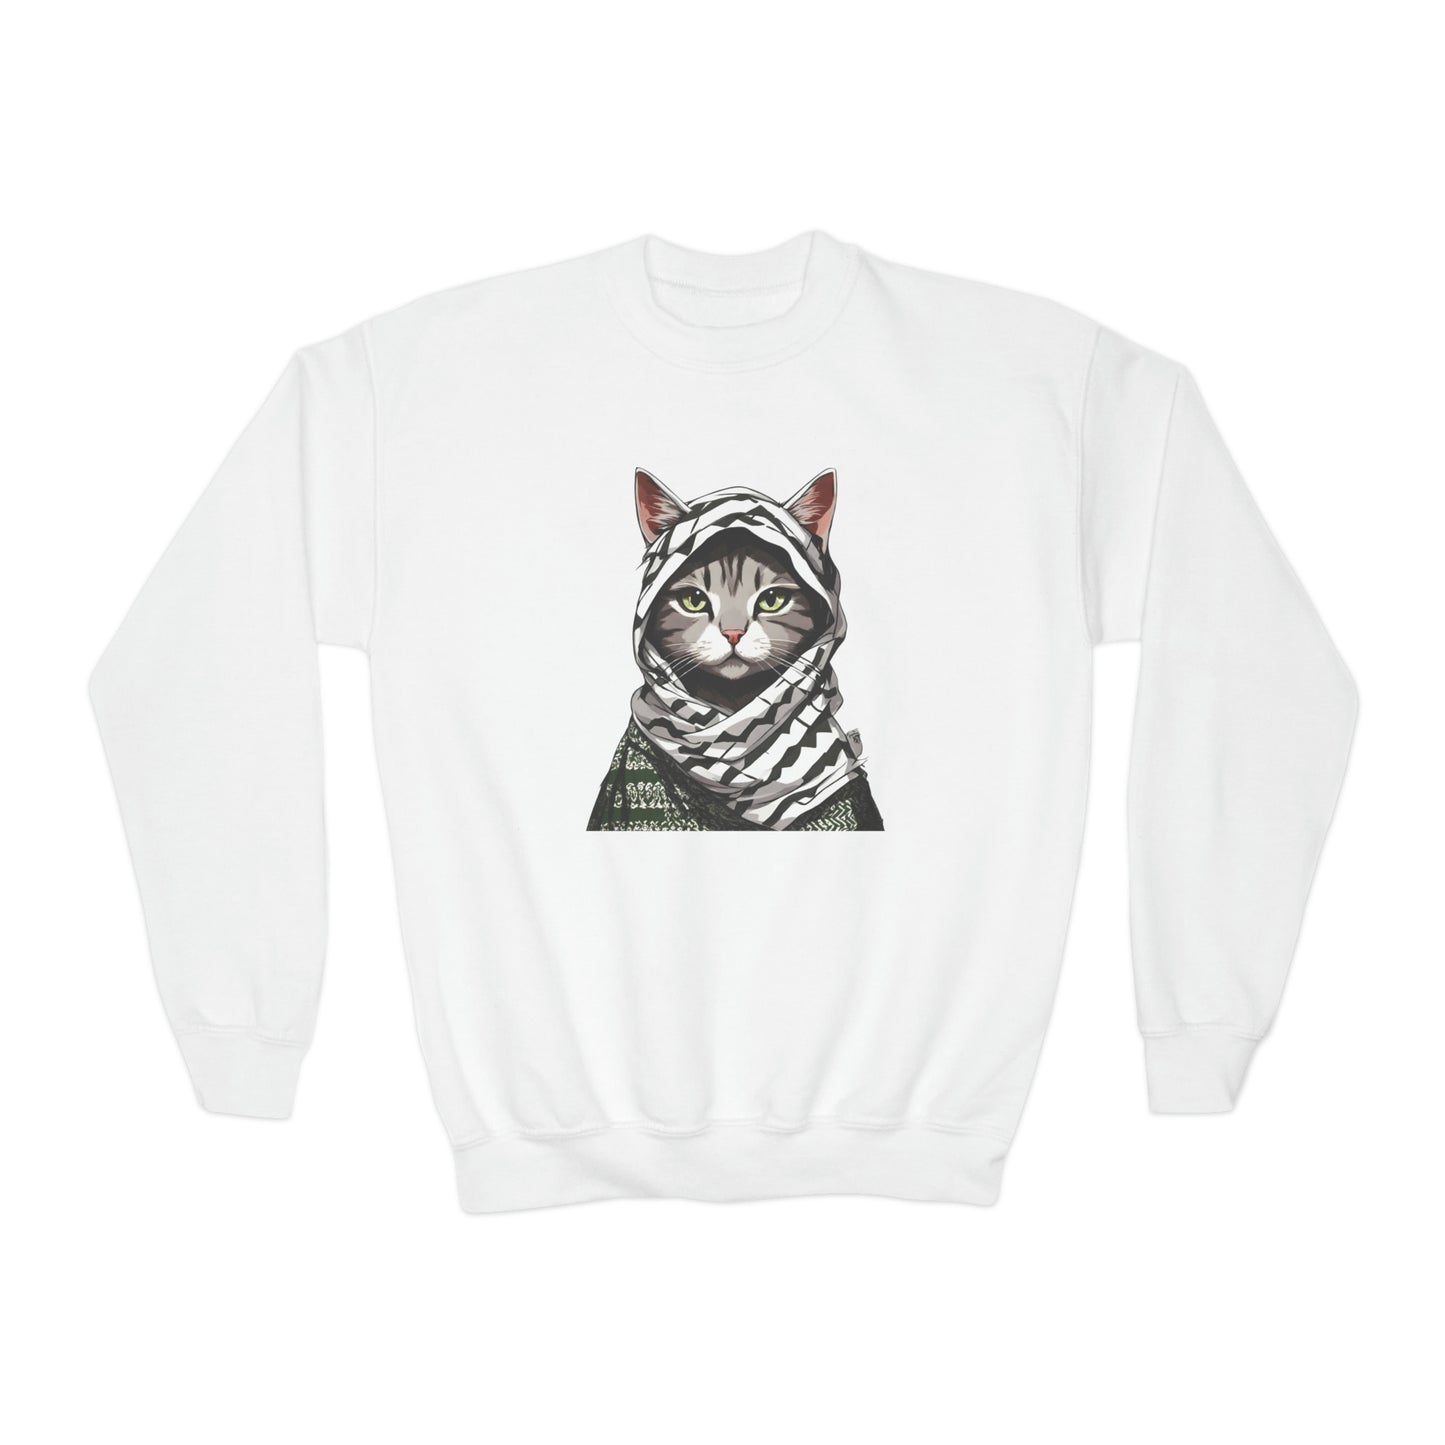 Keffiyeh Cat - Youth Crewneck Sweatshirt